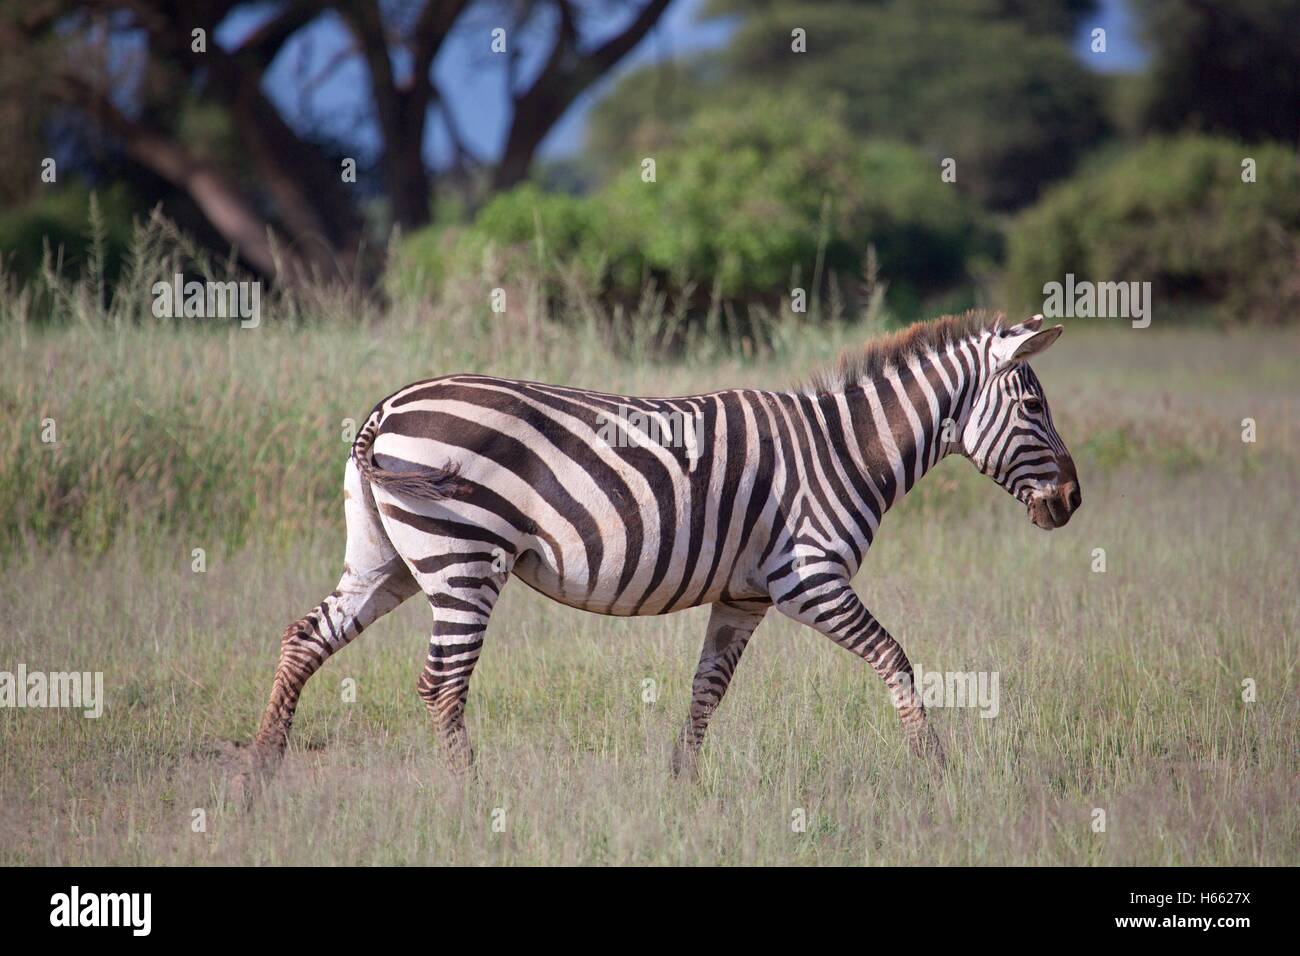 Zebra on safari in Amboseli National Park, Kenya. Stock Photo